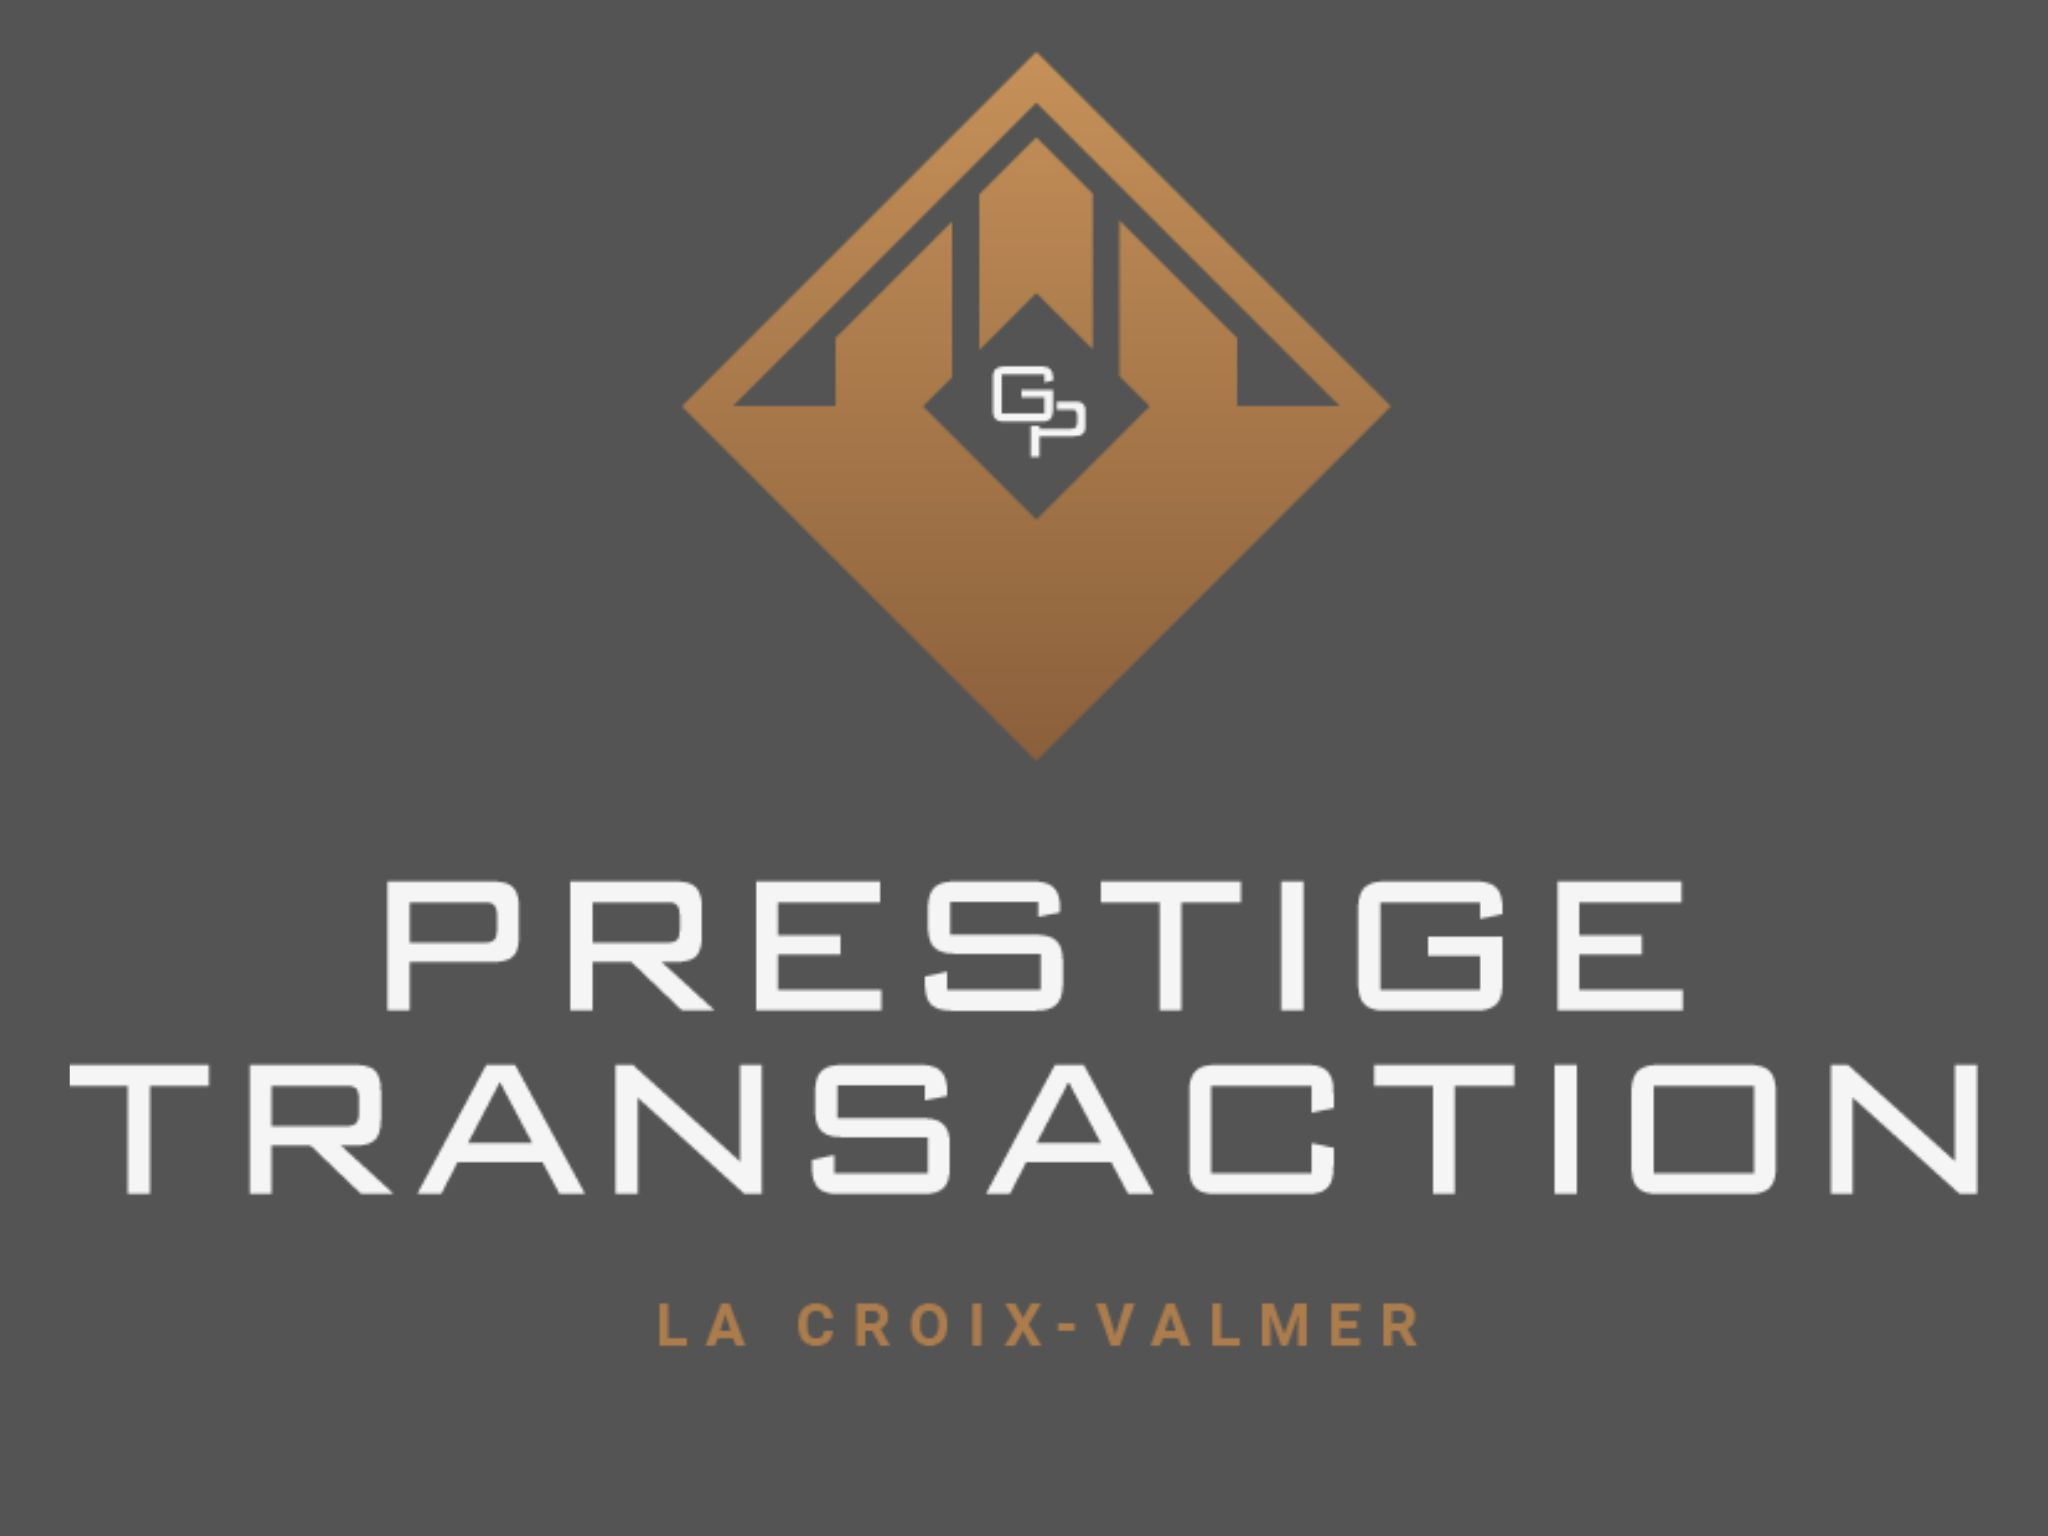 Prestige transaction